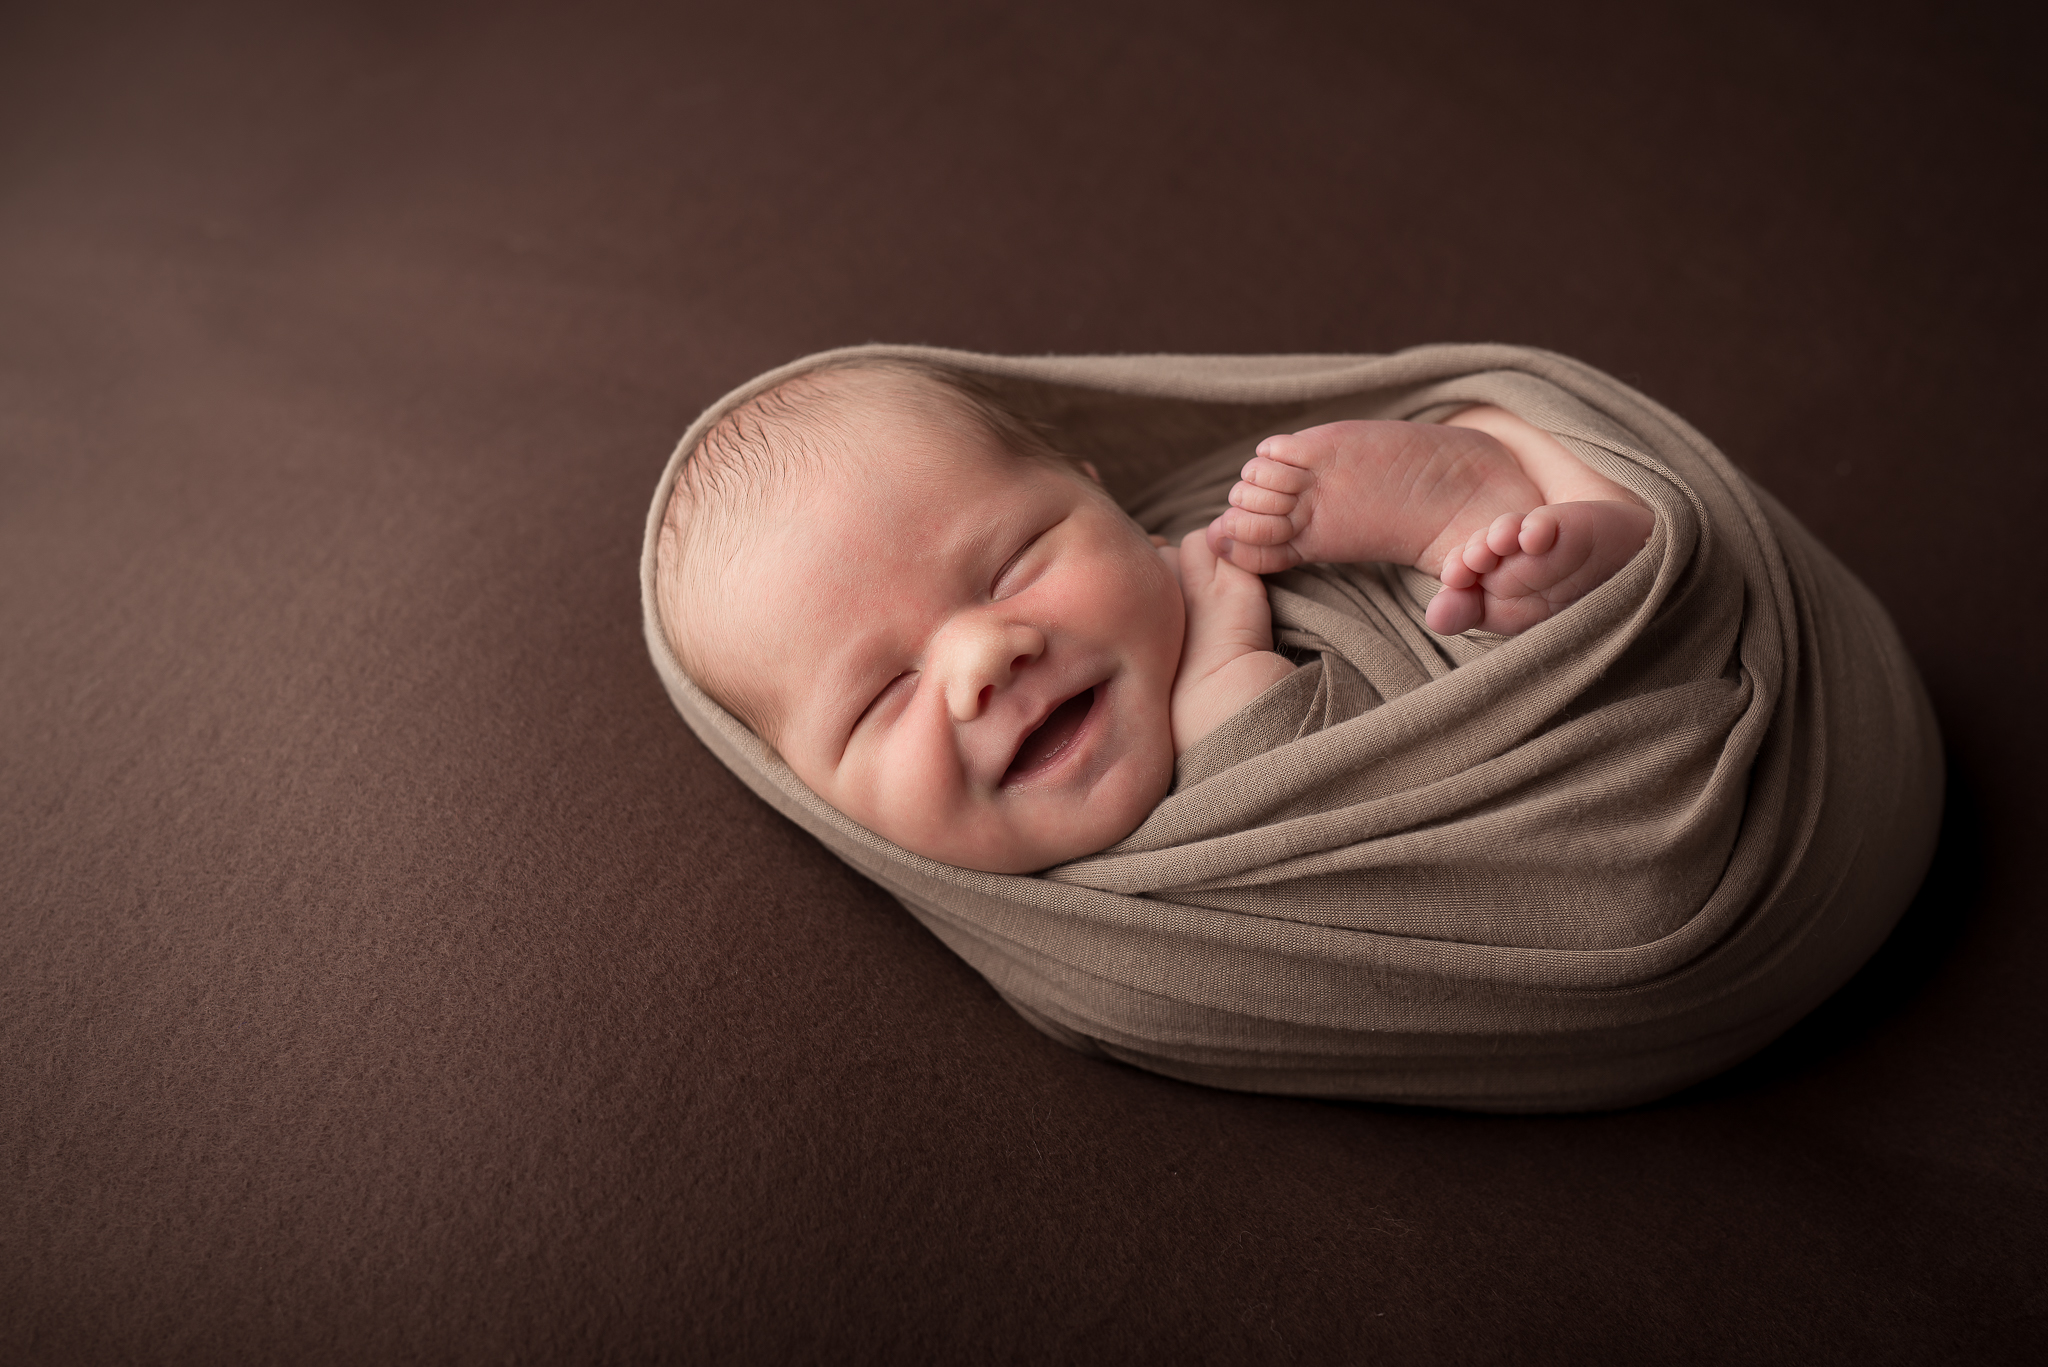 Newborn131NaomiLuciennePhotography052018-Edit.jpg